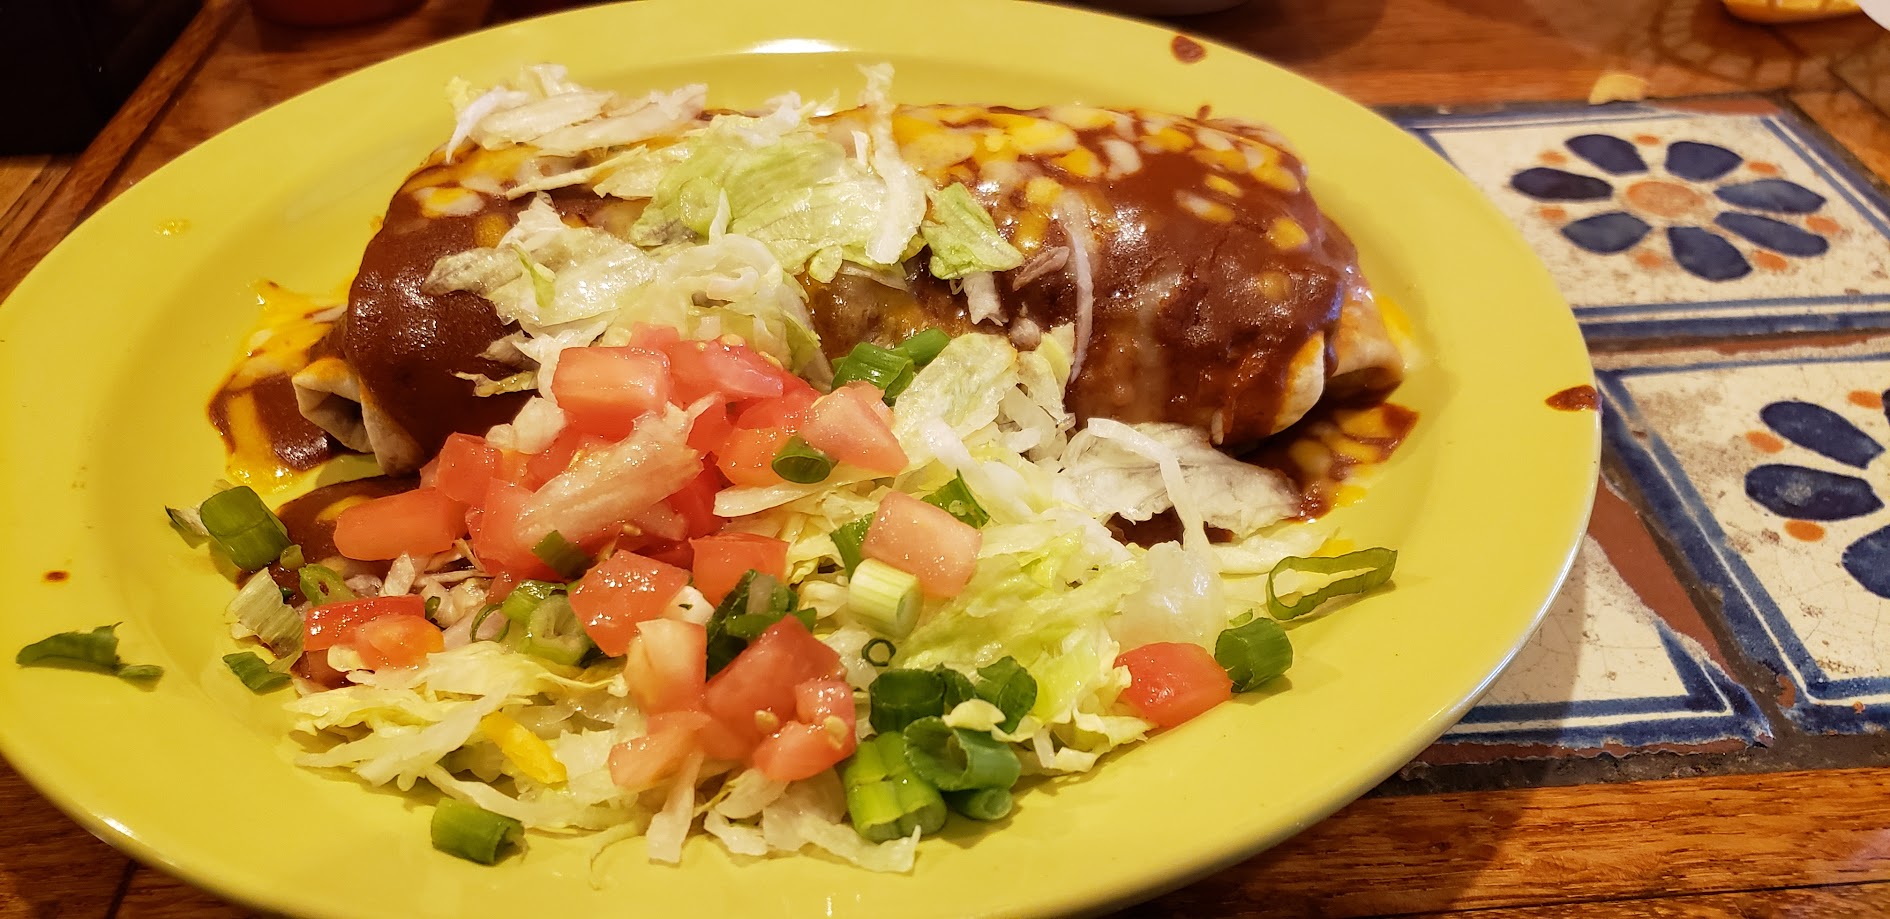 The Original La Canasta Mexican Food